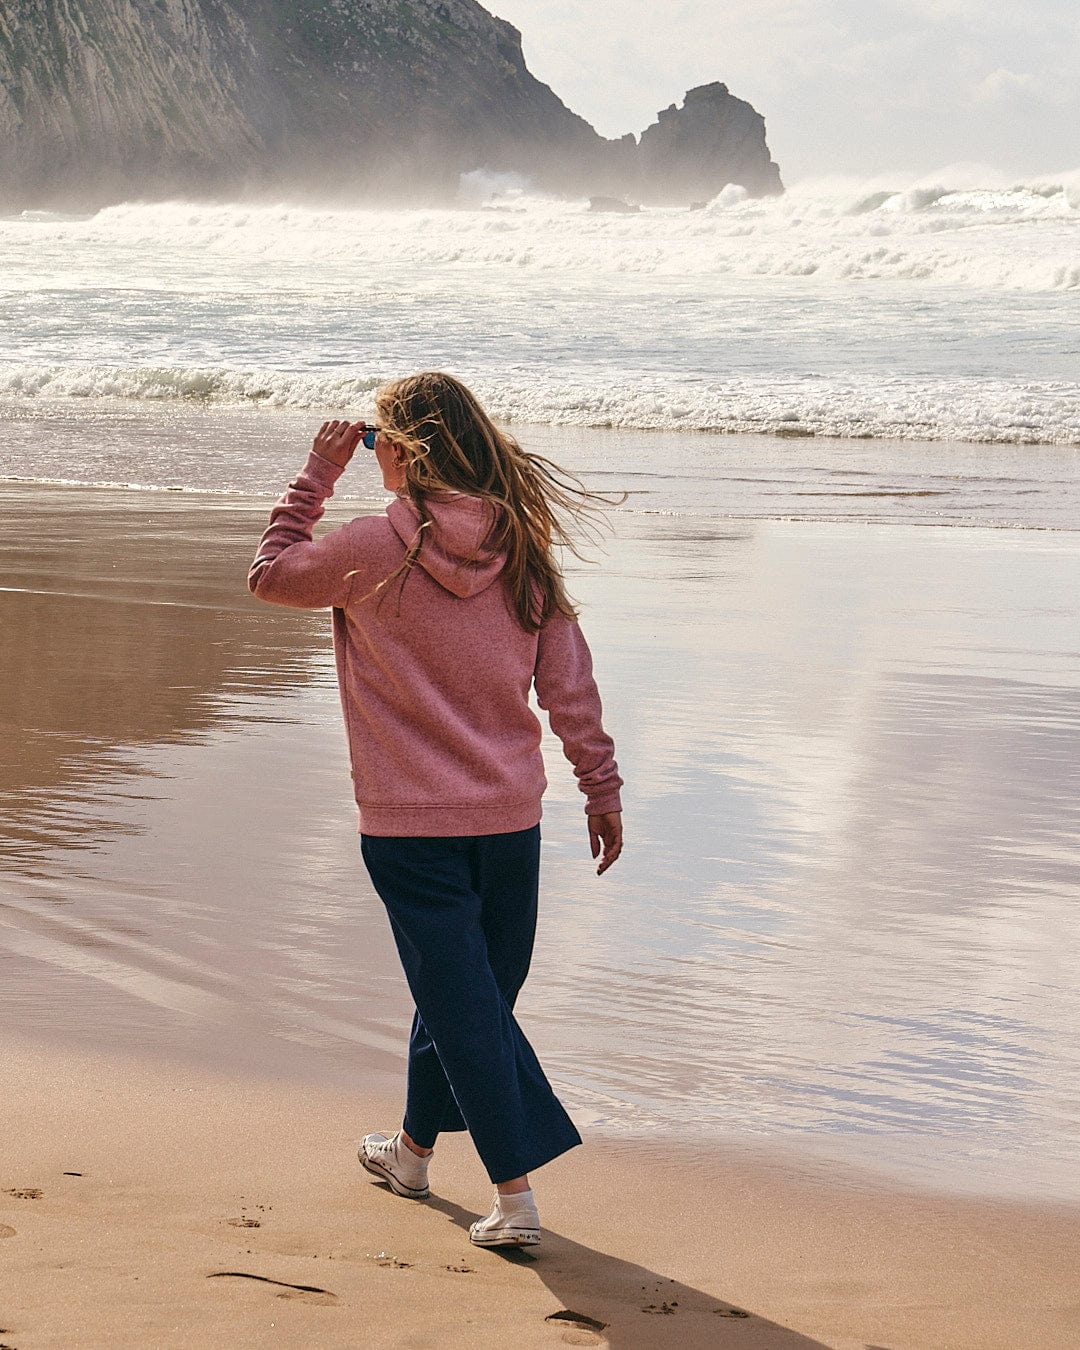 A woman wearing a Saltrock Galak - Womens Fur Lined Hoody - Pink walks on a beach near the ocean, finding both comfort and adventure.